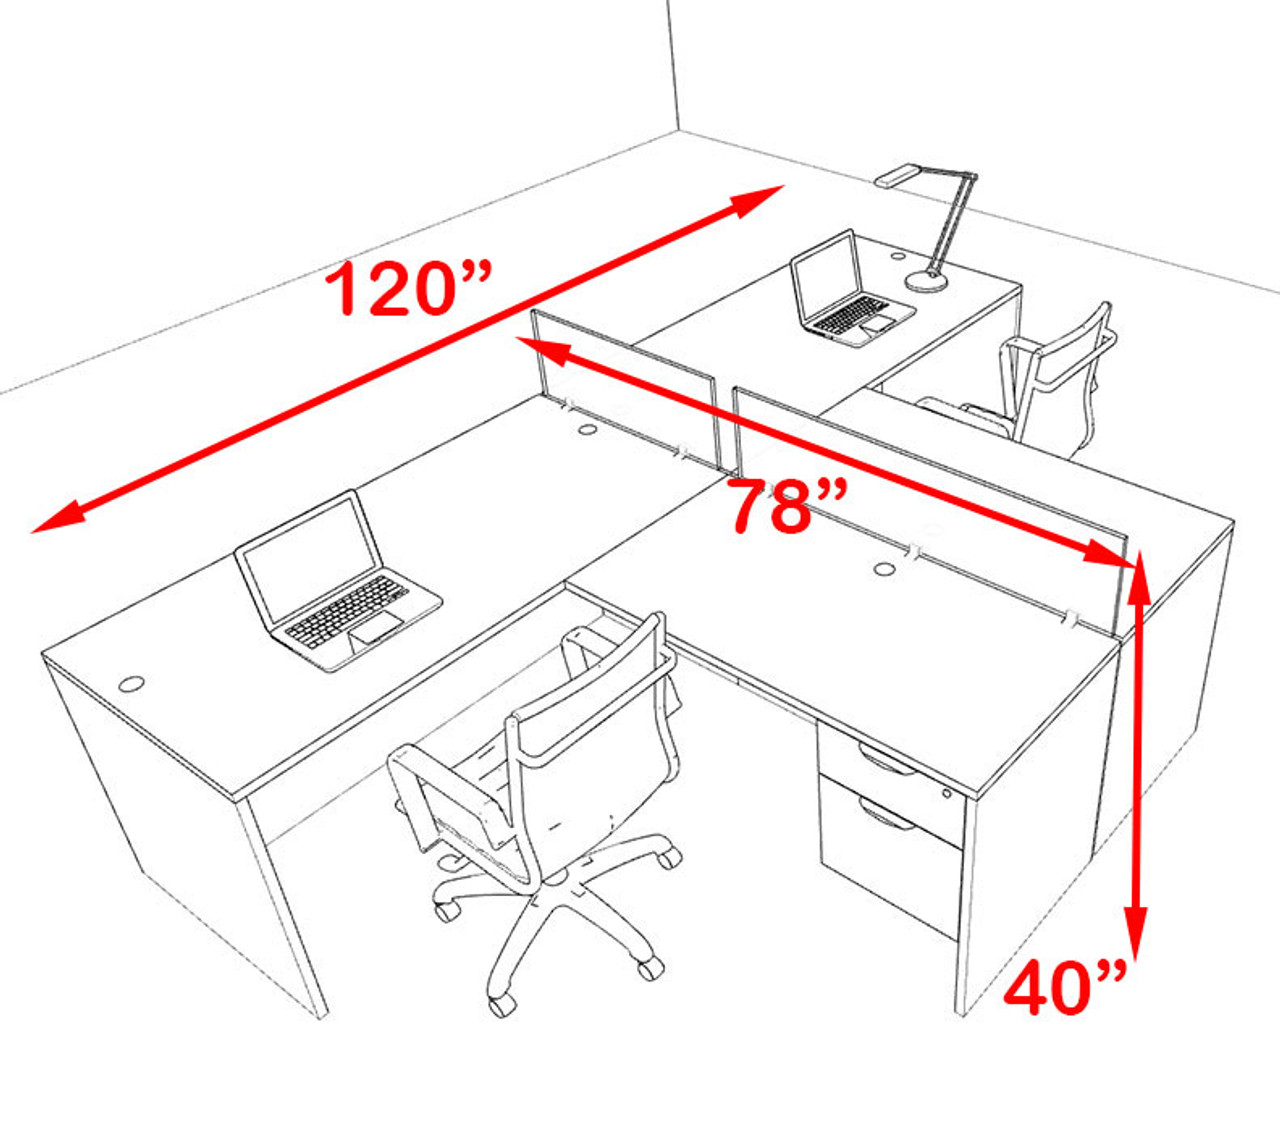 Two Person Orange Divider Office Workstation Desk Set, #OT-SUL-SPO53